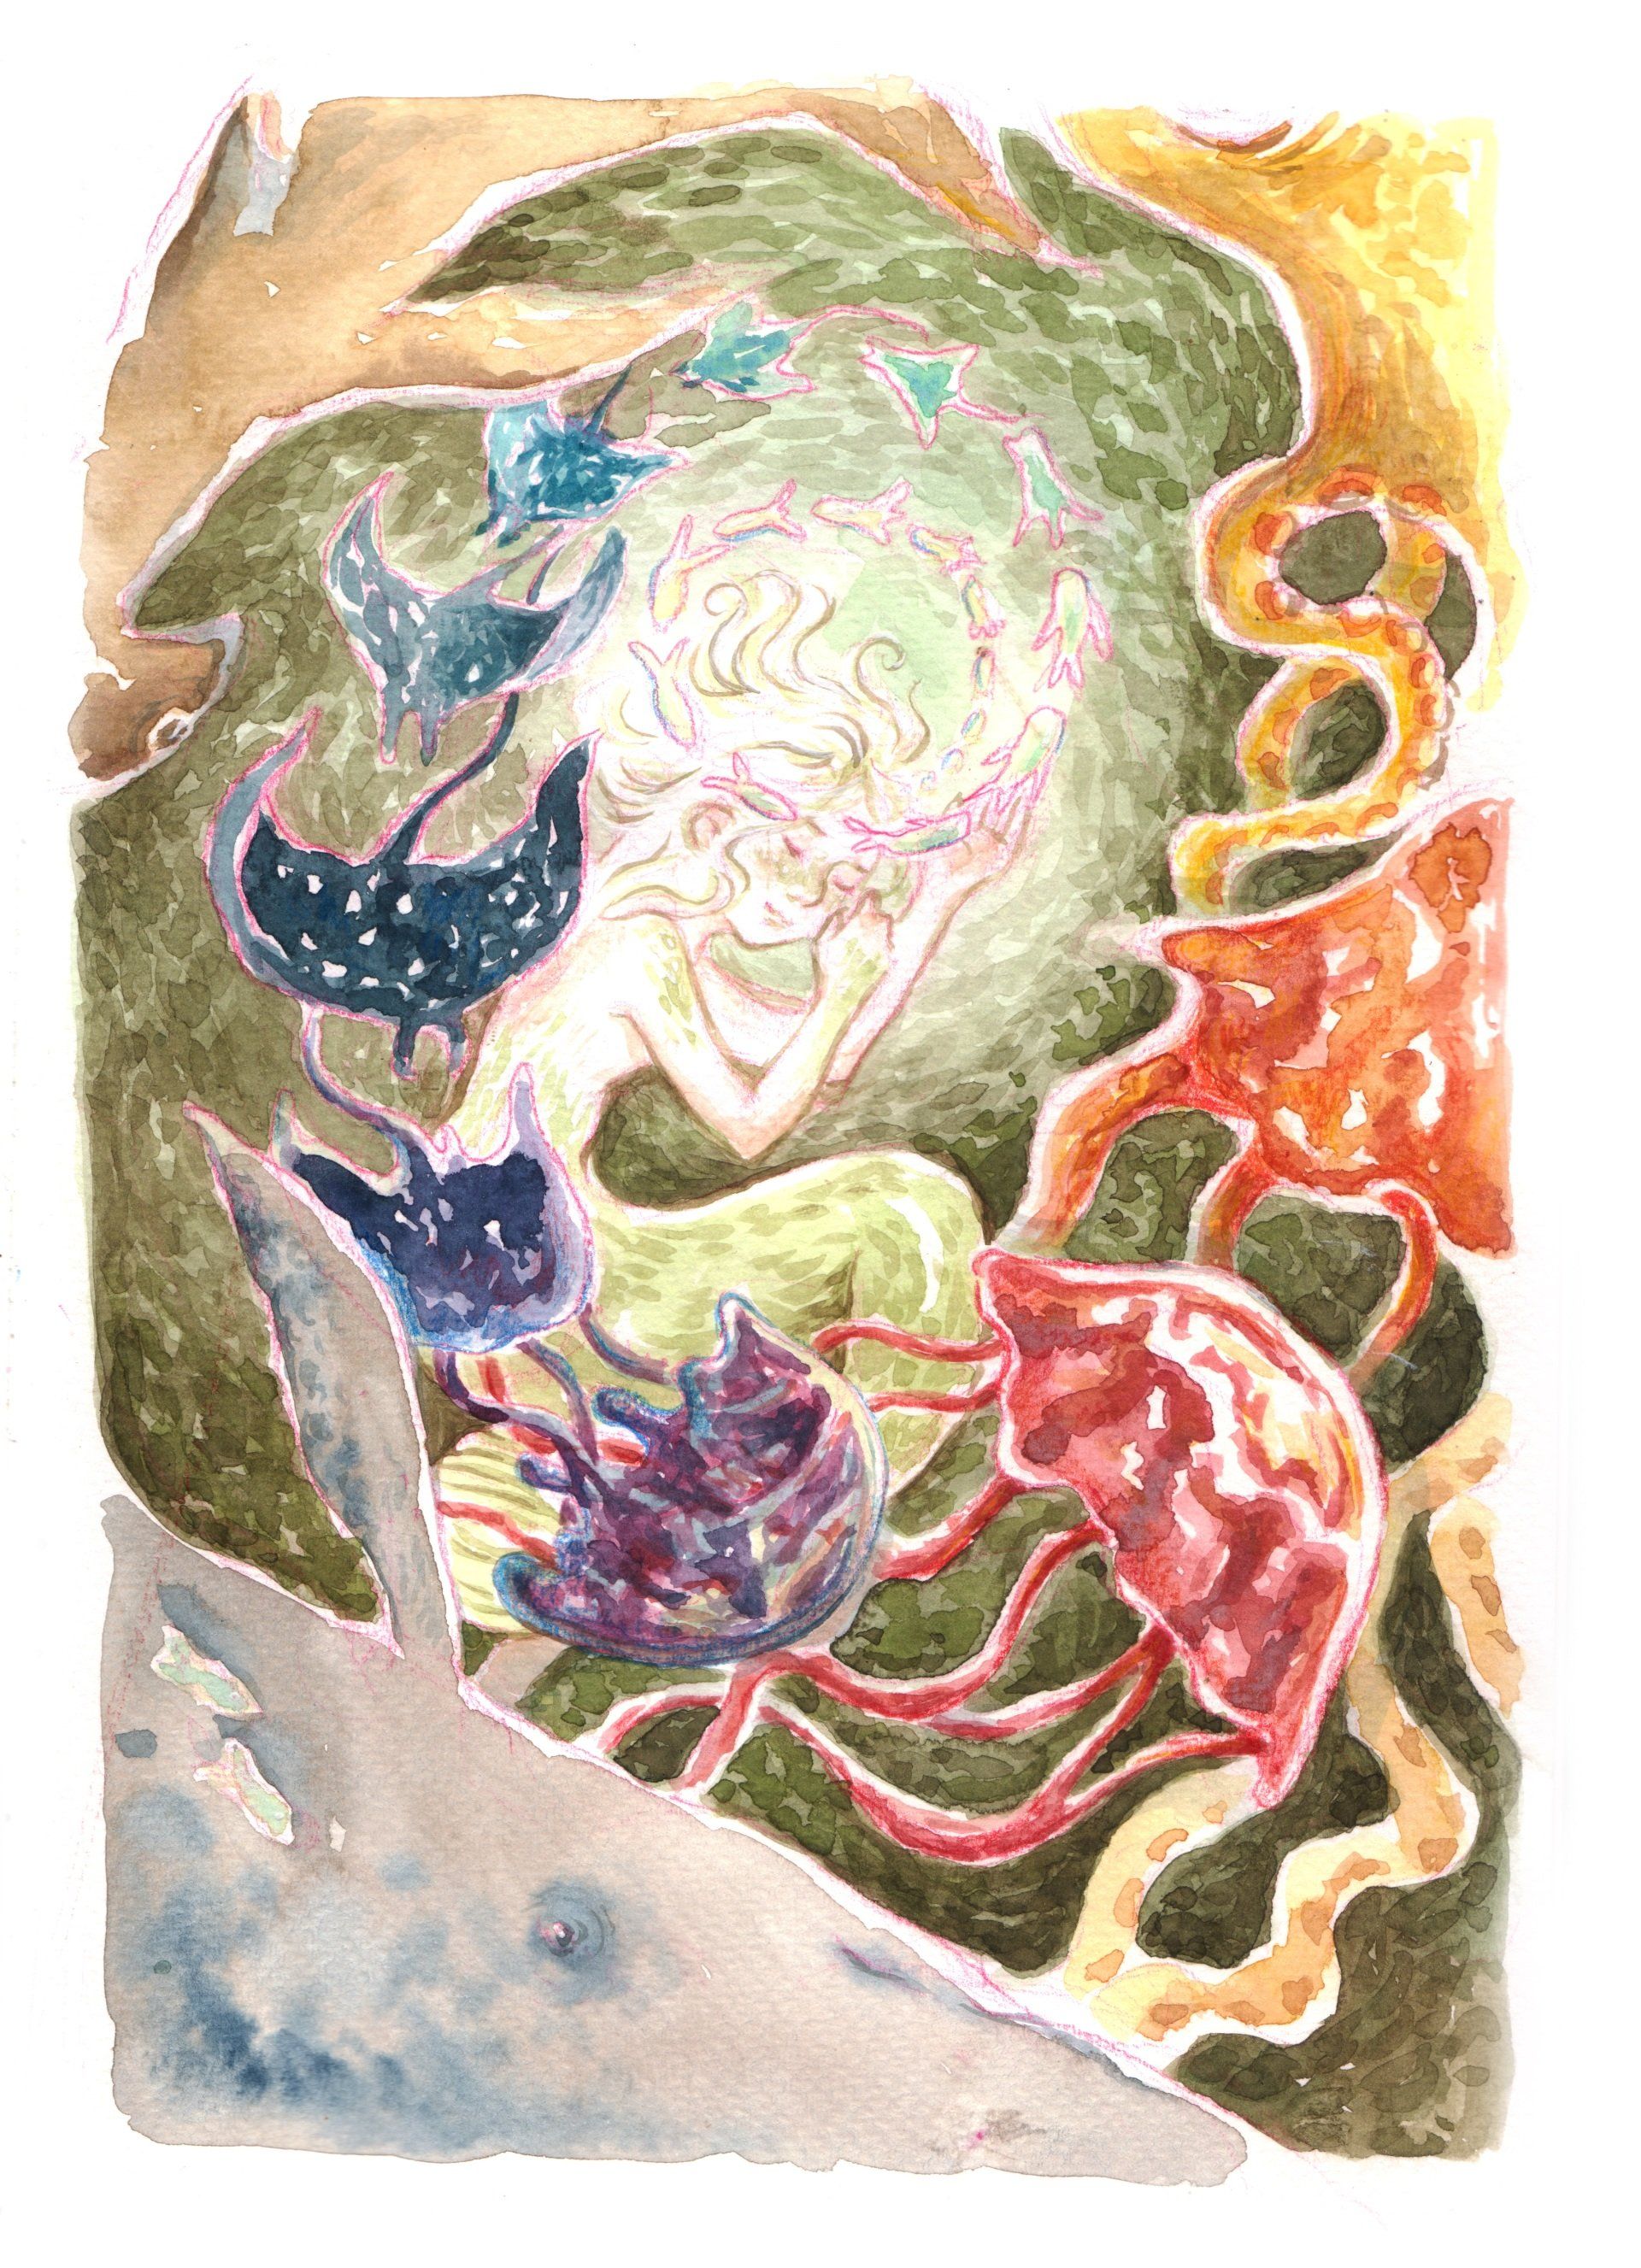 Mariella Fahr Illustration Meerjungfrau Traum dream